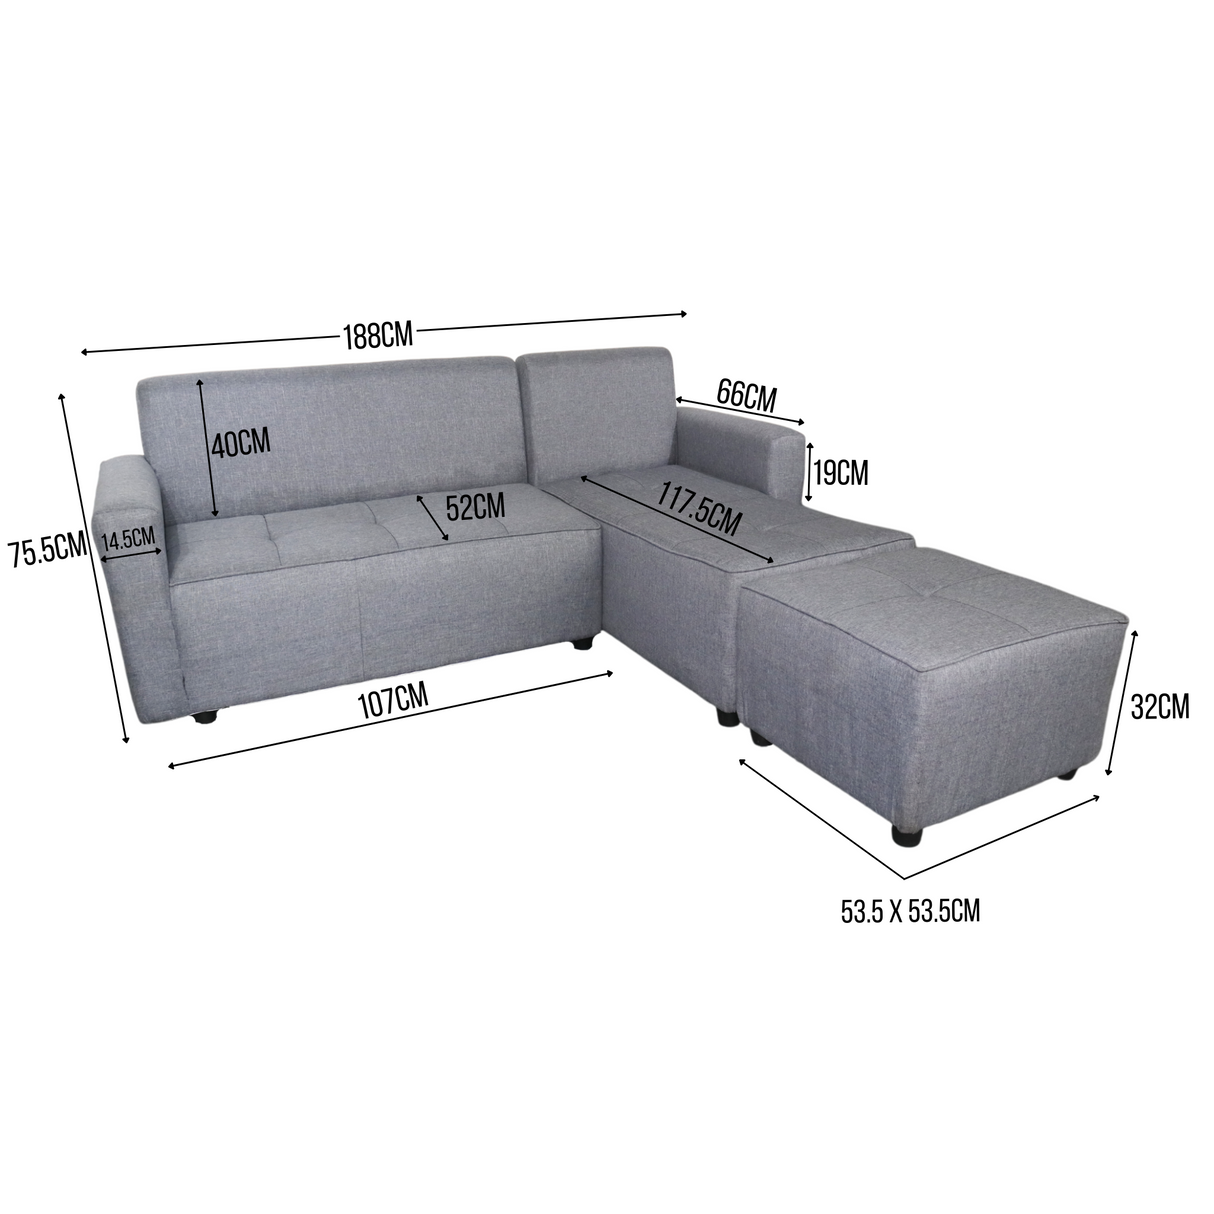 CONNER L-Shape Fabric Sofa with Ottoman Furnigo